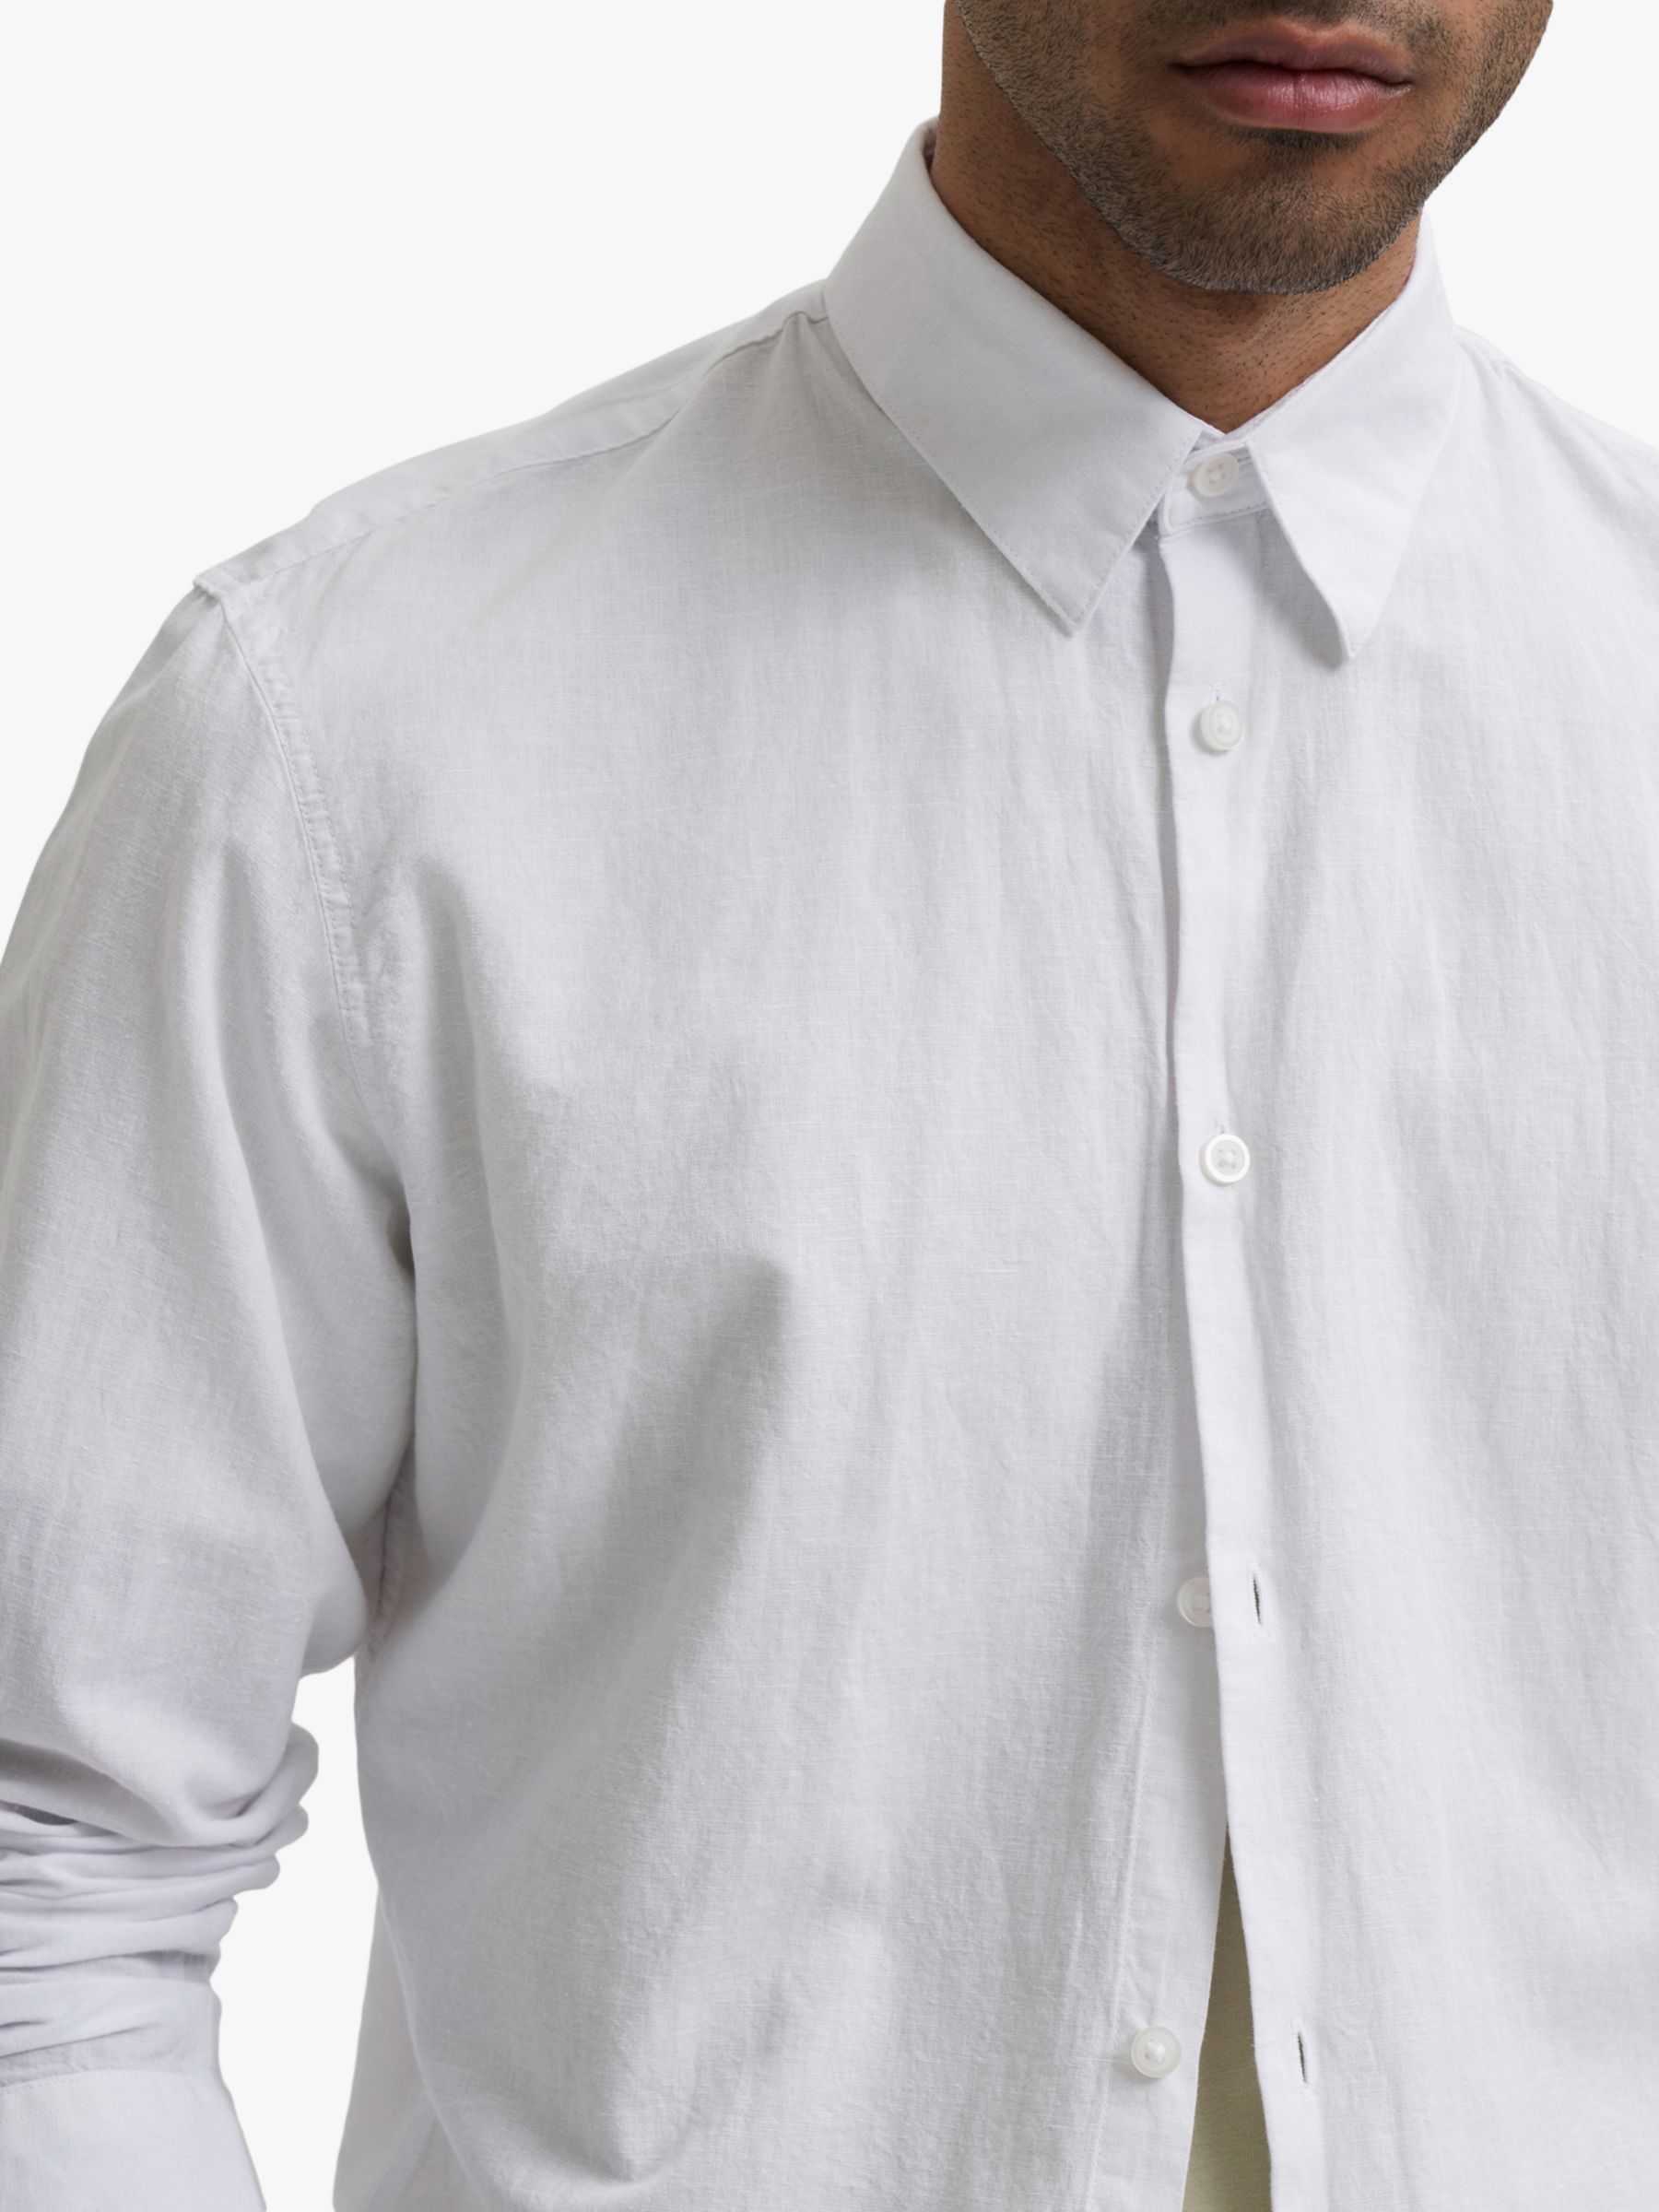 Buy SELECTED HOMME Cotton Linen Blend Shirt Online at johnlewis.com